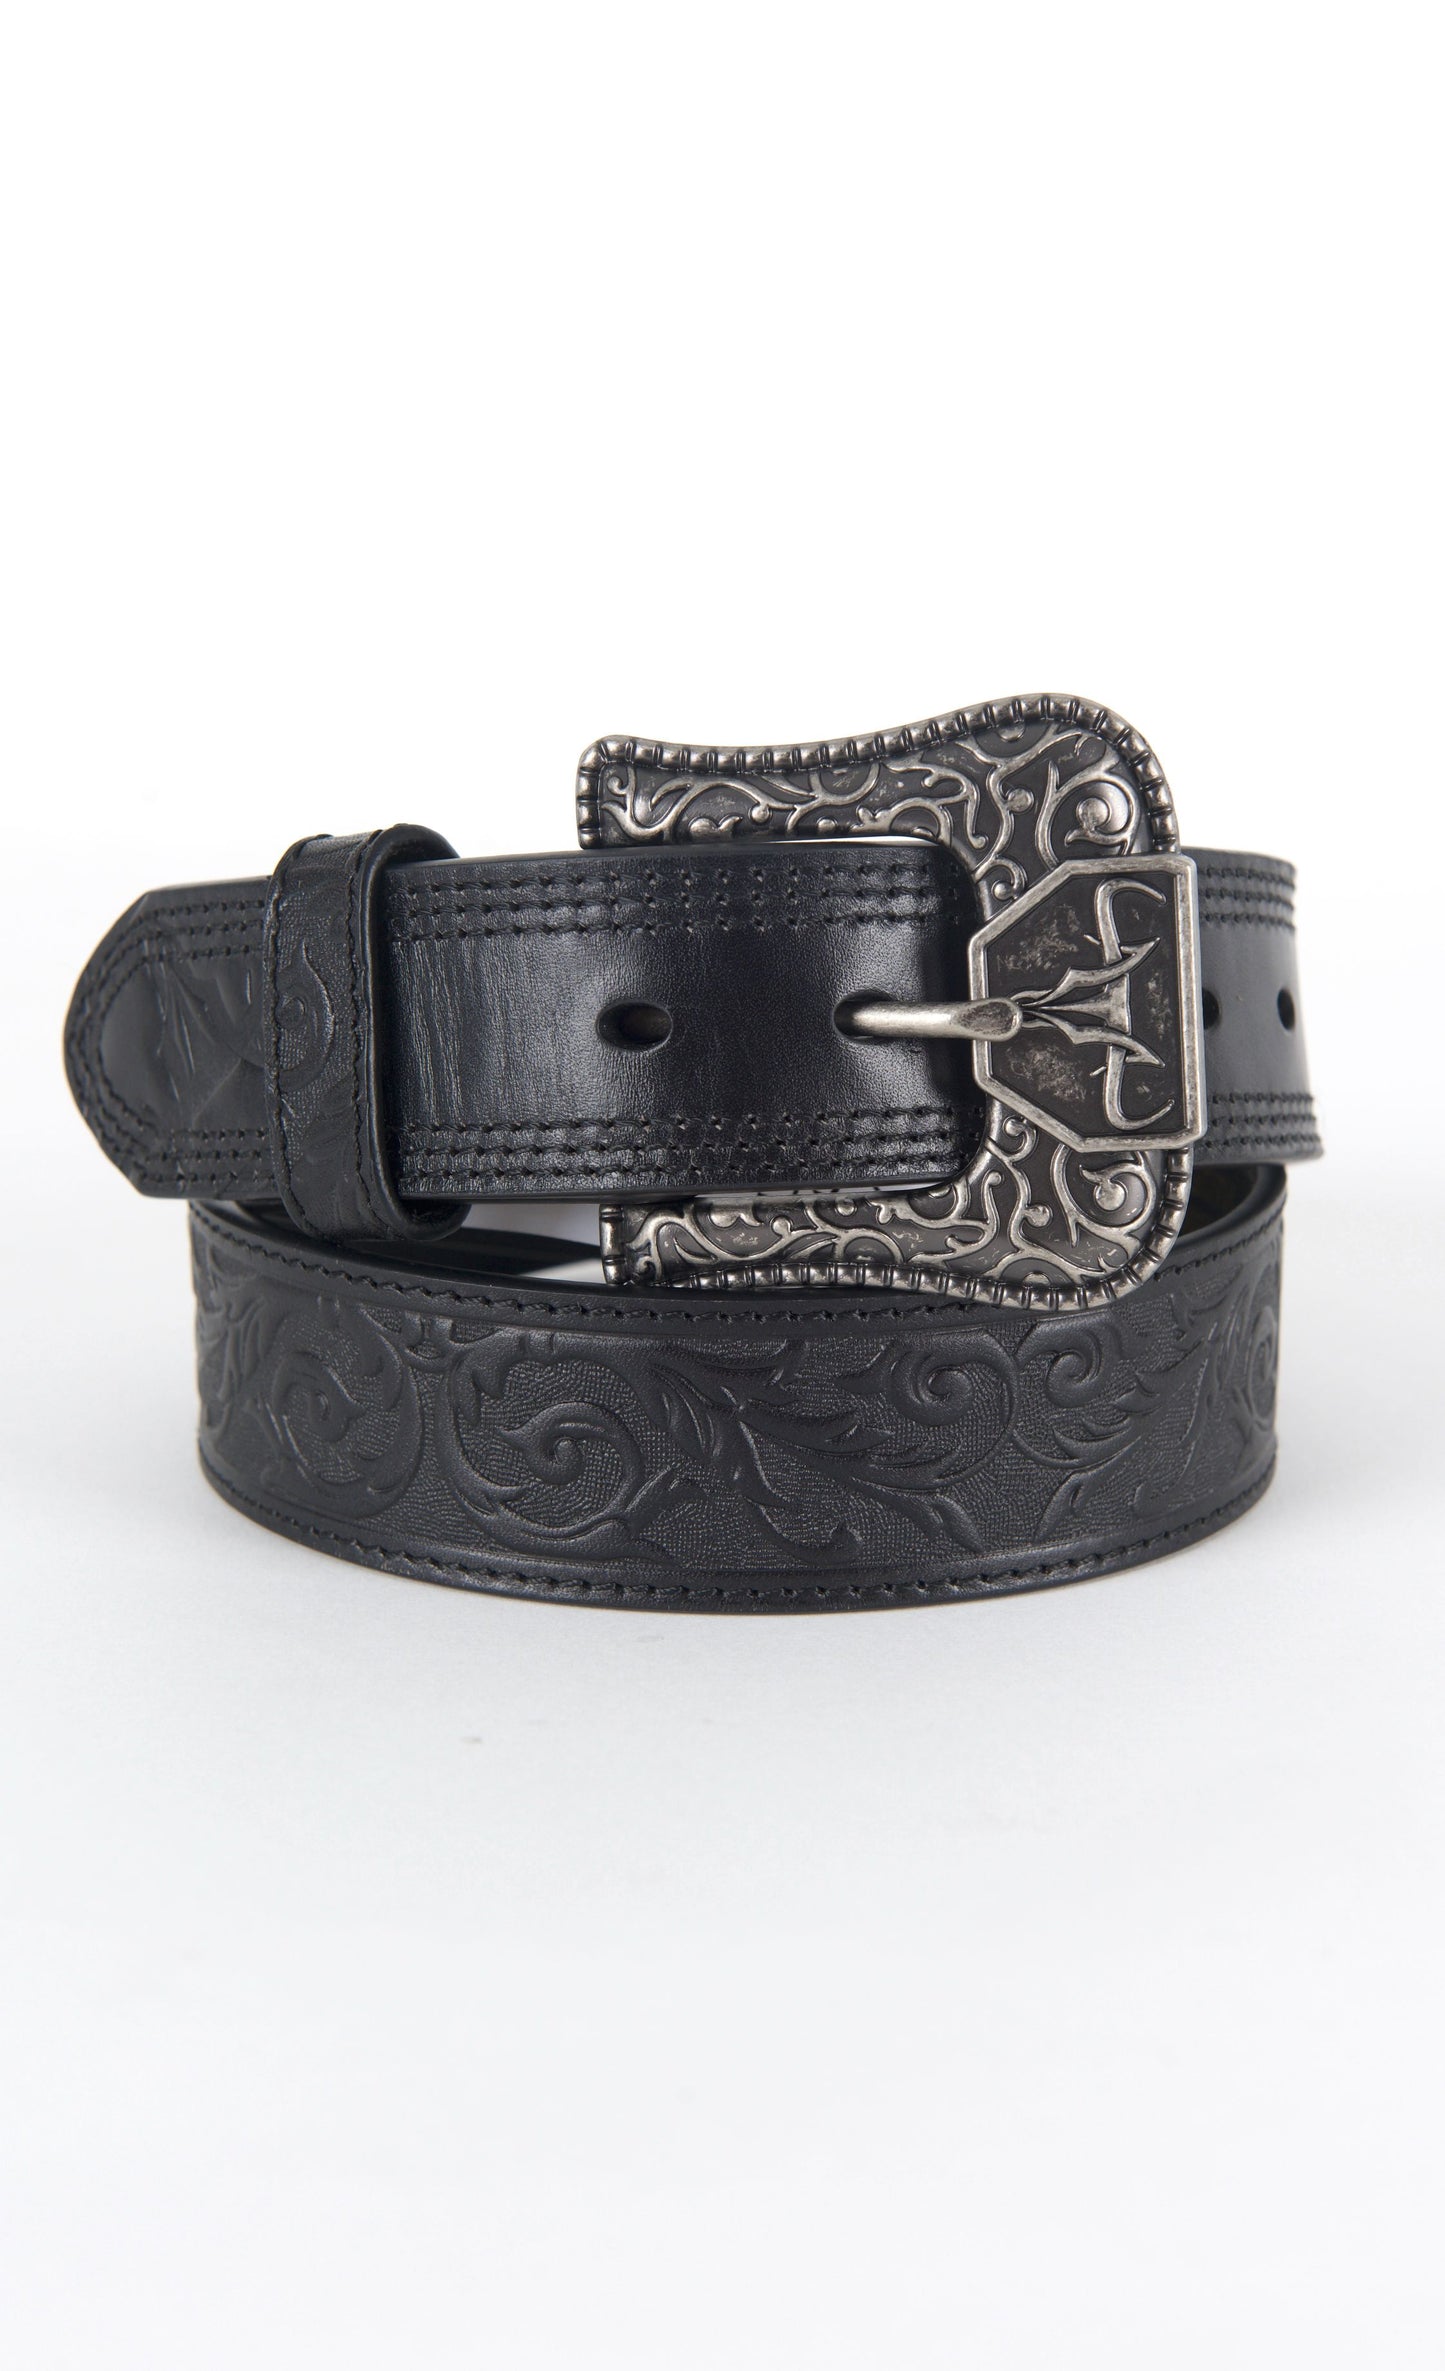 Mens Genuine Leather 3D Embossed Belt - Black